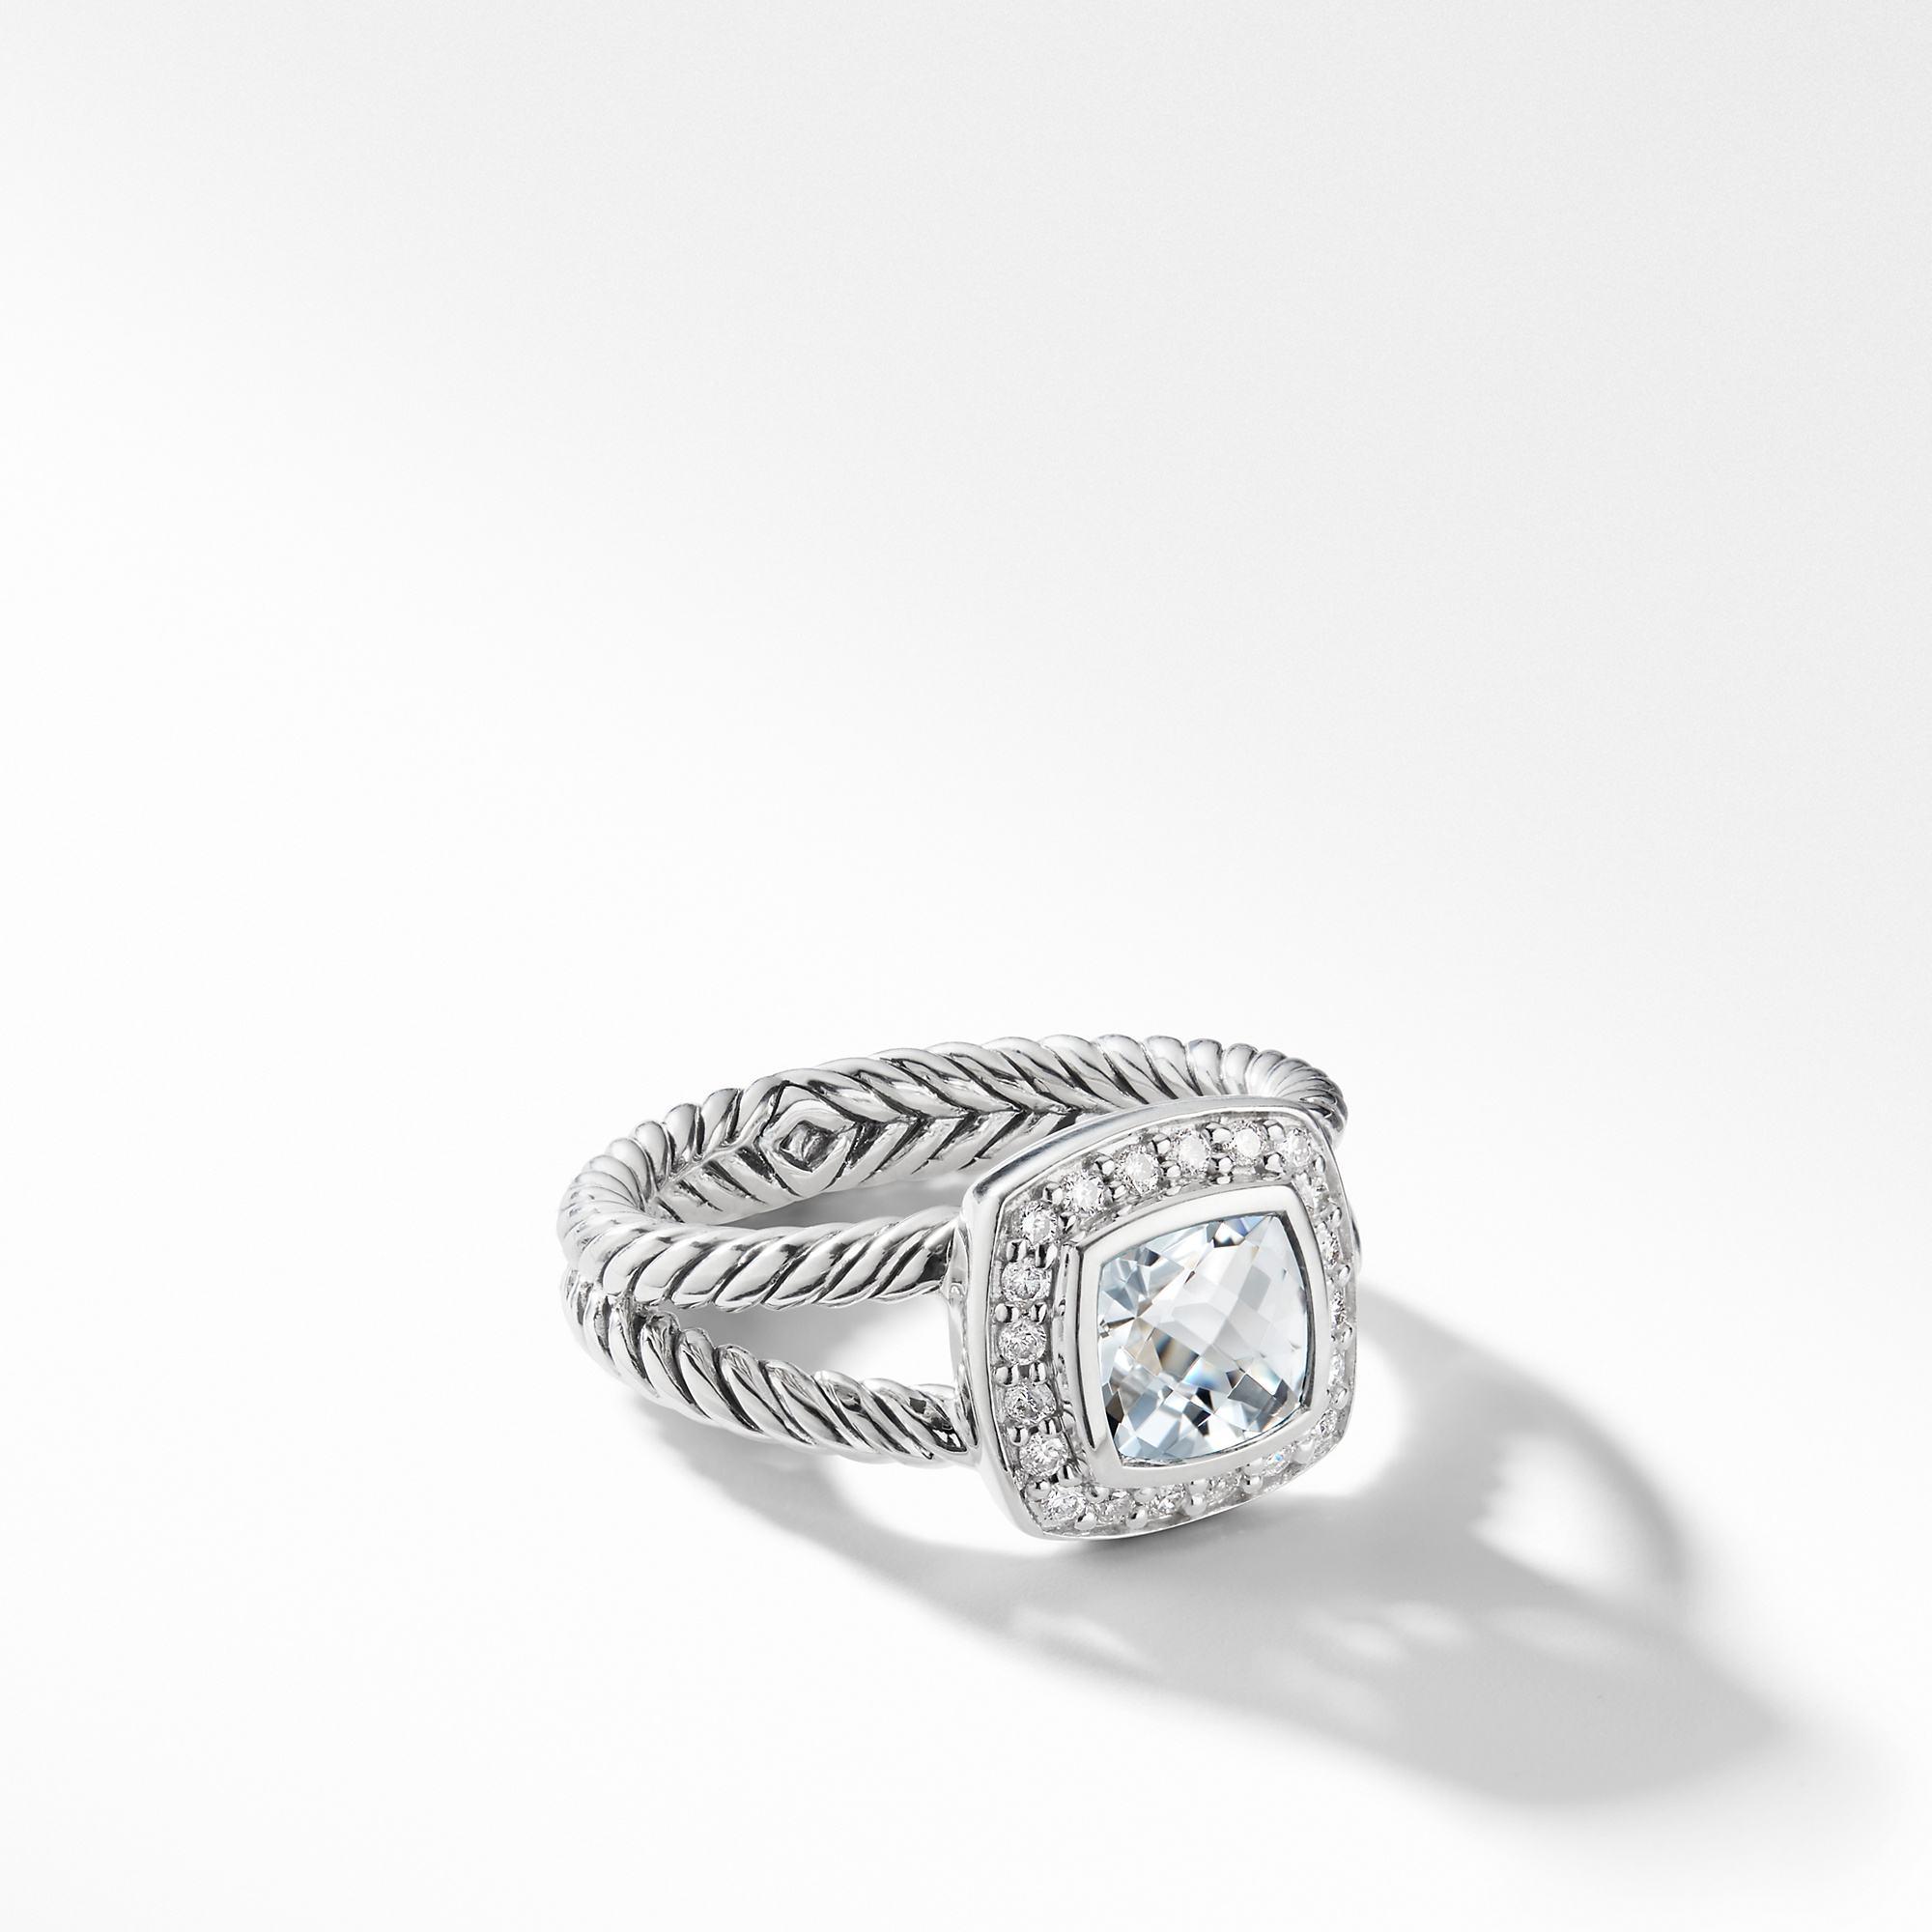 David Yurman Petite Albion Ring with White Topaz and Diamonds, size 7